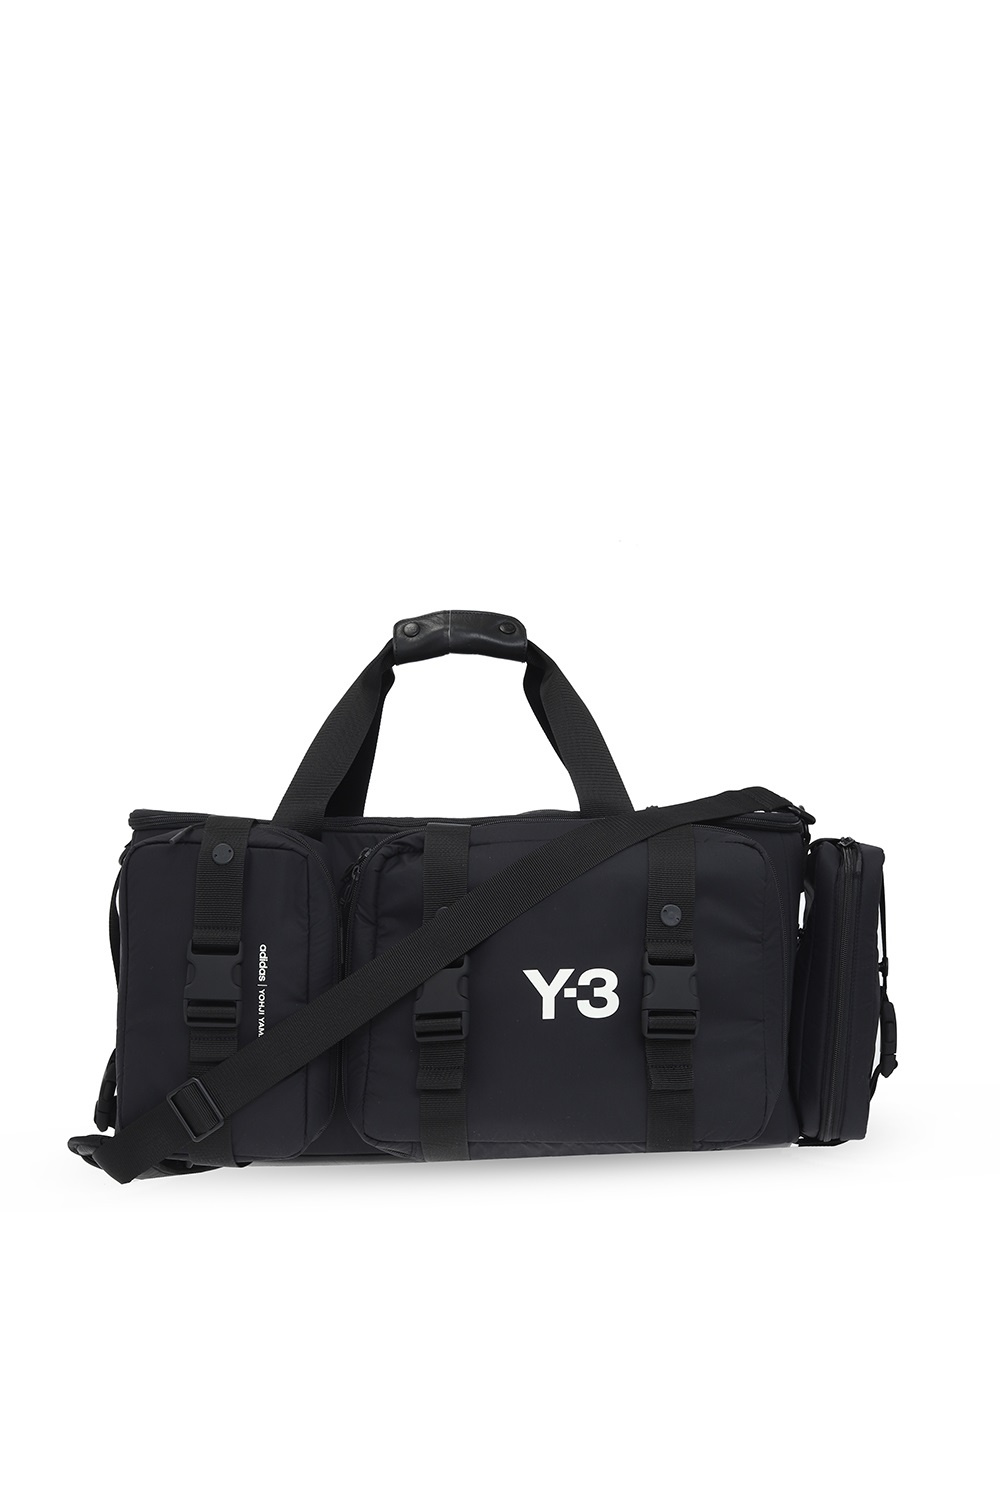 Y-3 Yohji Yamamoto Hugo Hugo Piper Cross Bag Ld09